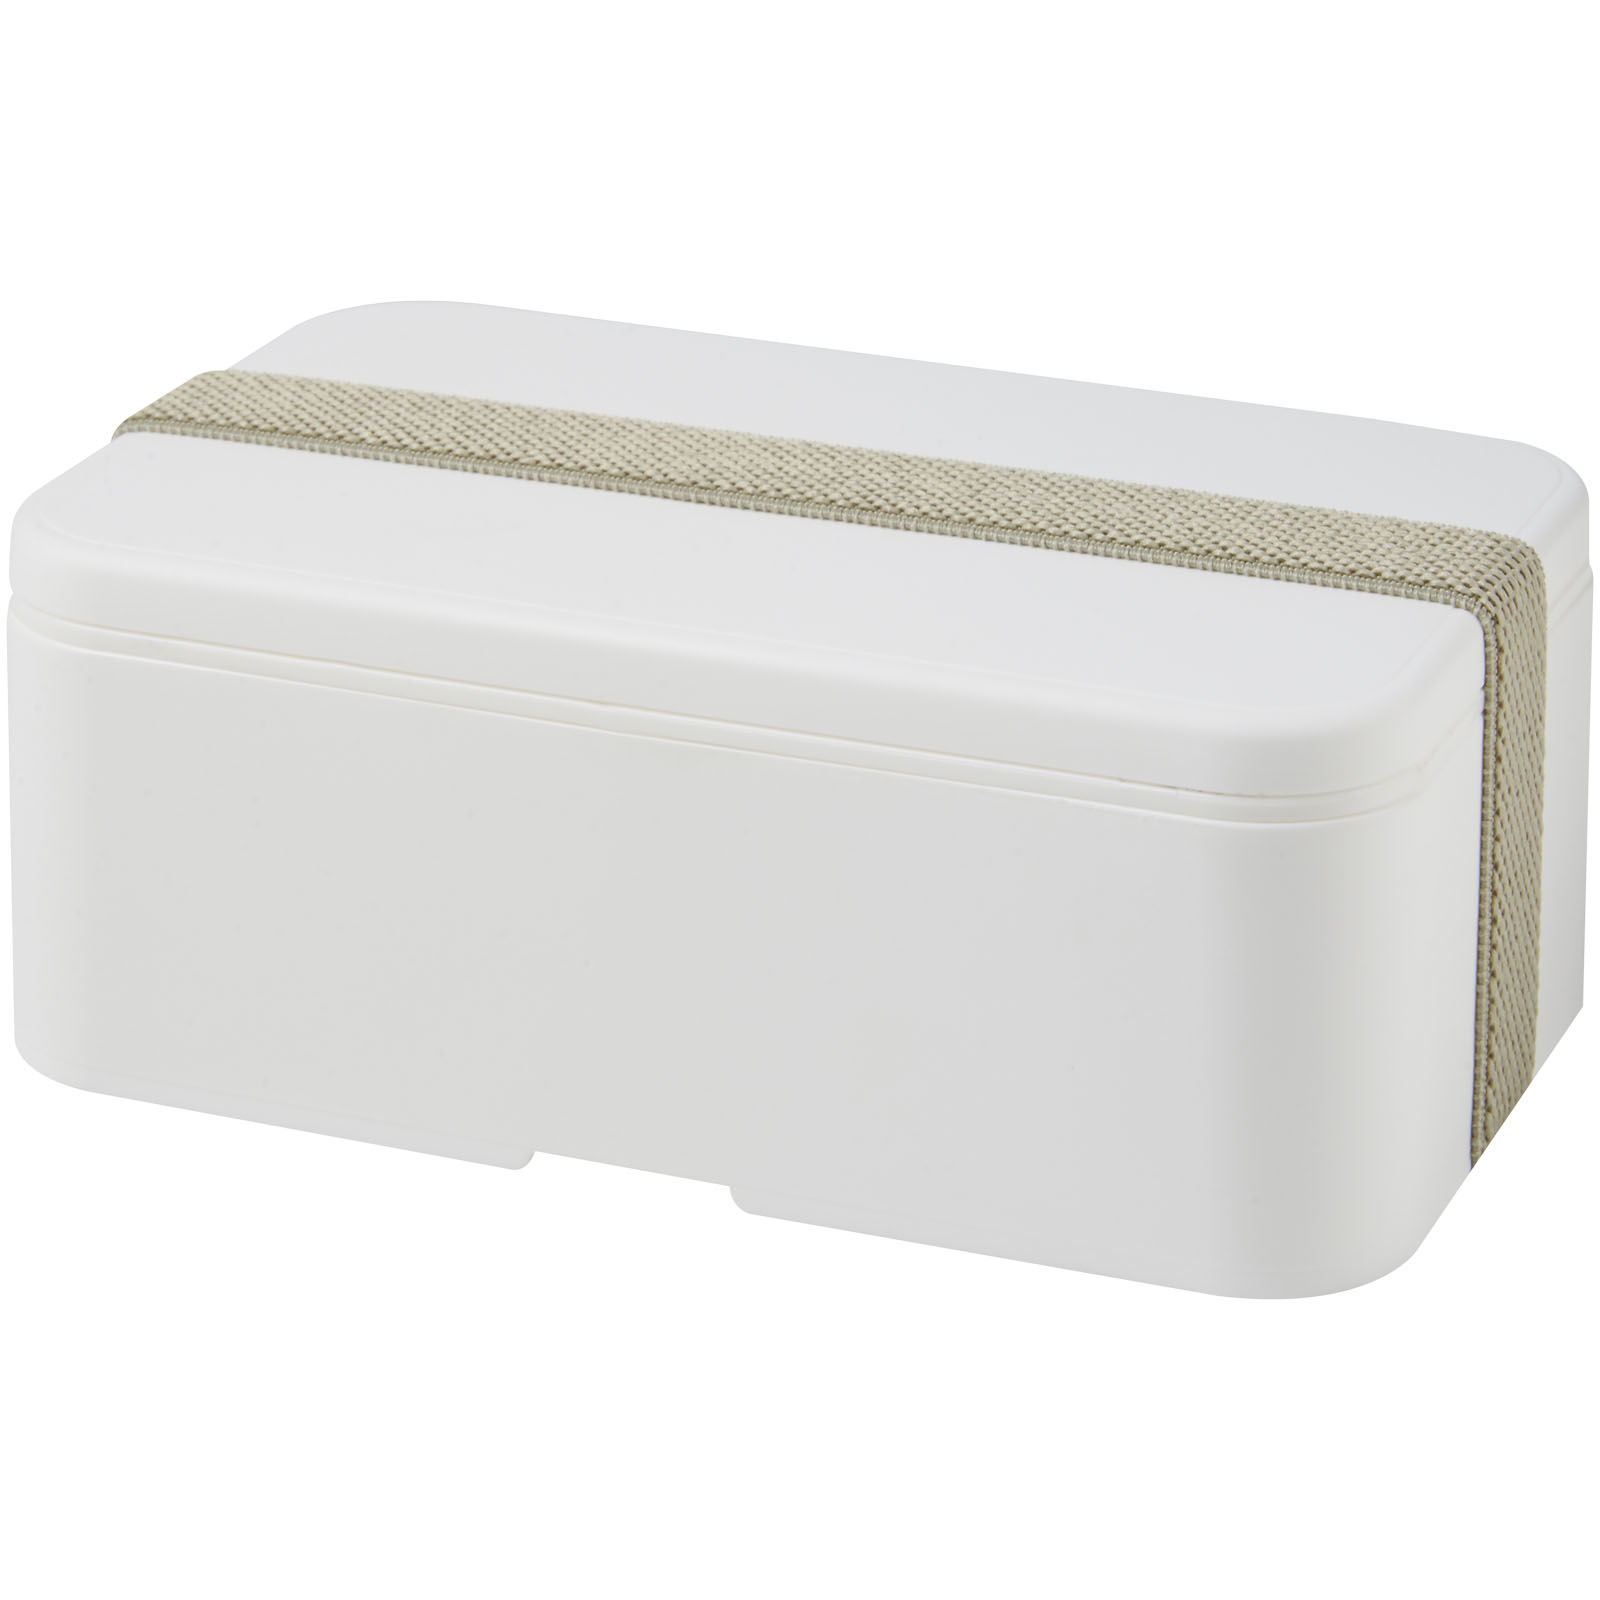 Lunch Boxes - MIYO single layer lunch box 